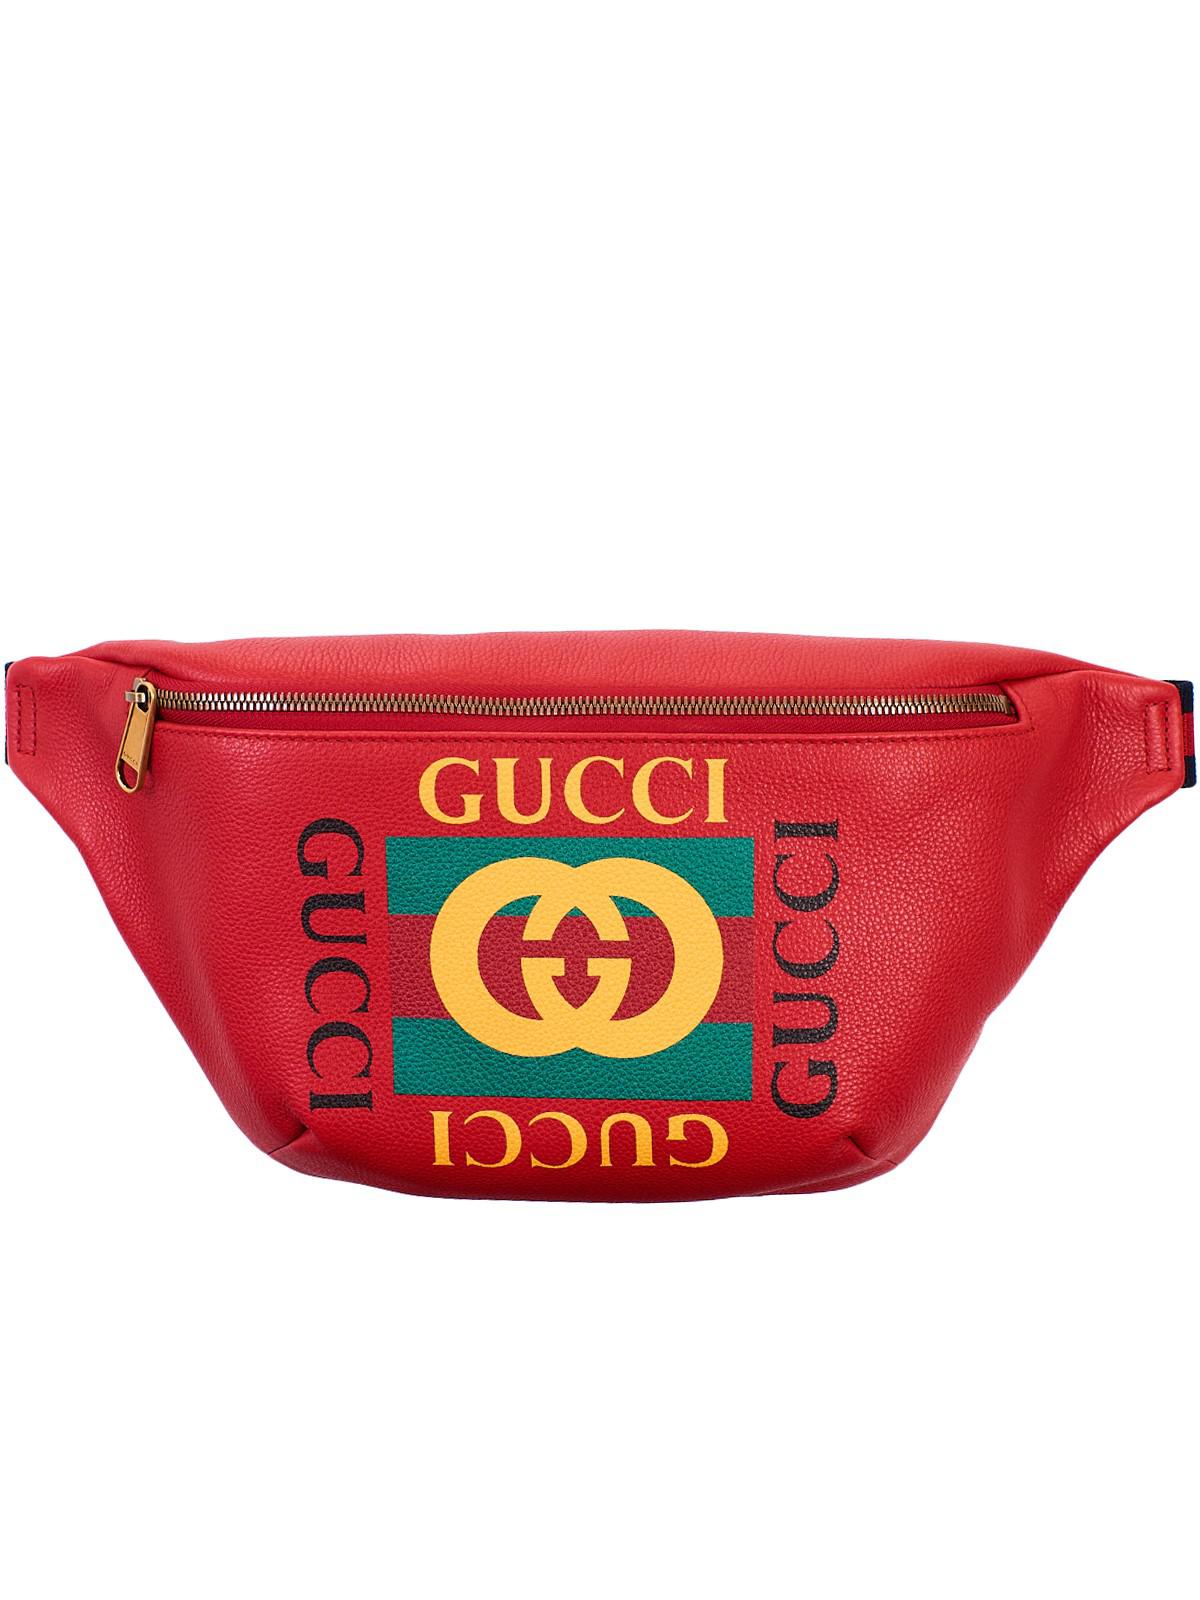 gucci waist bag red